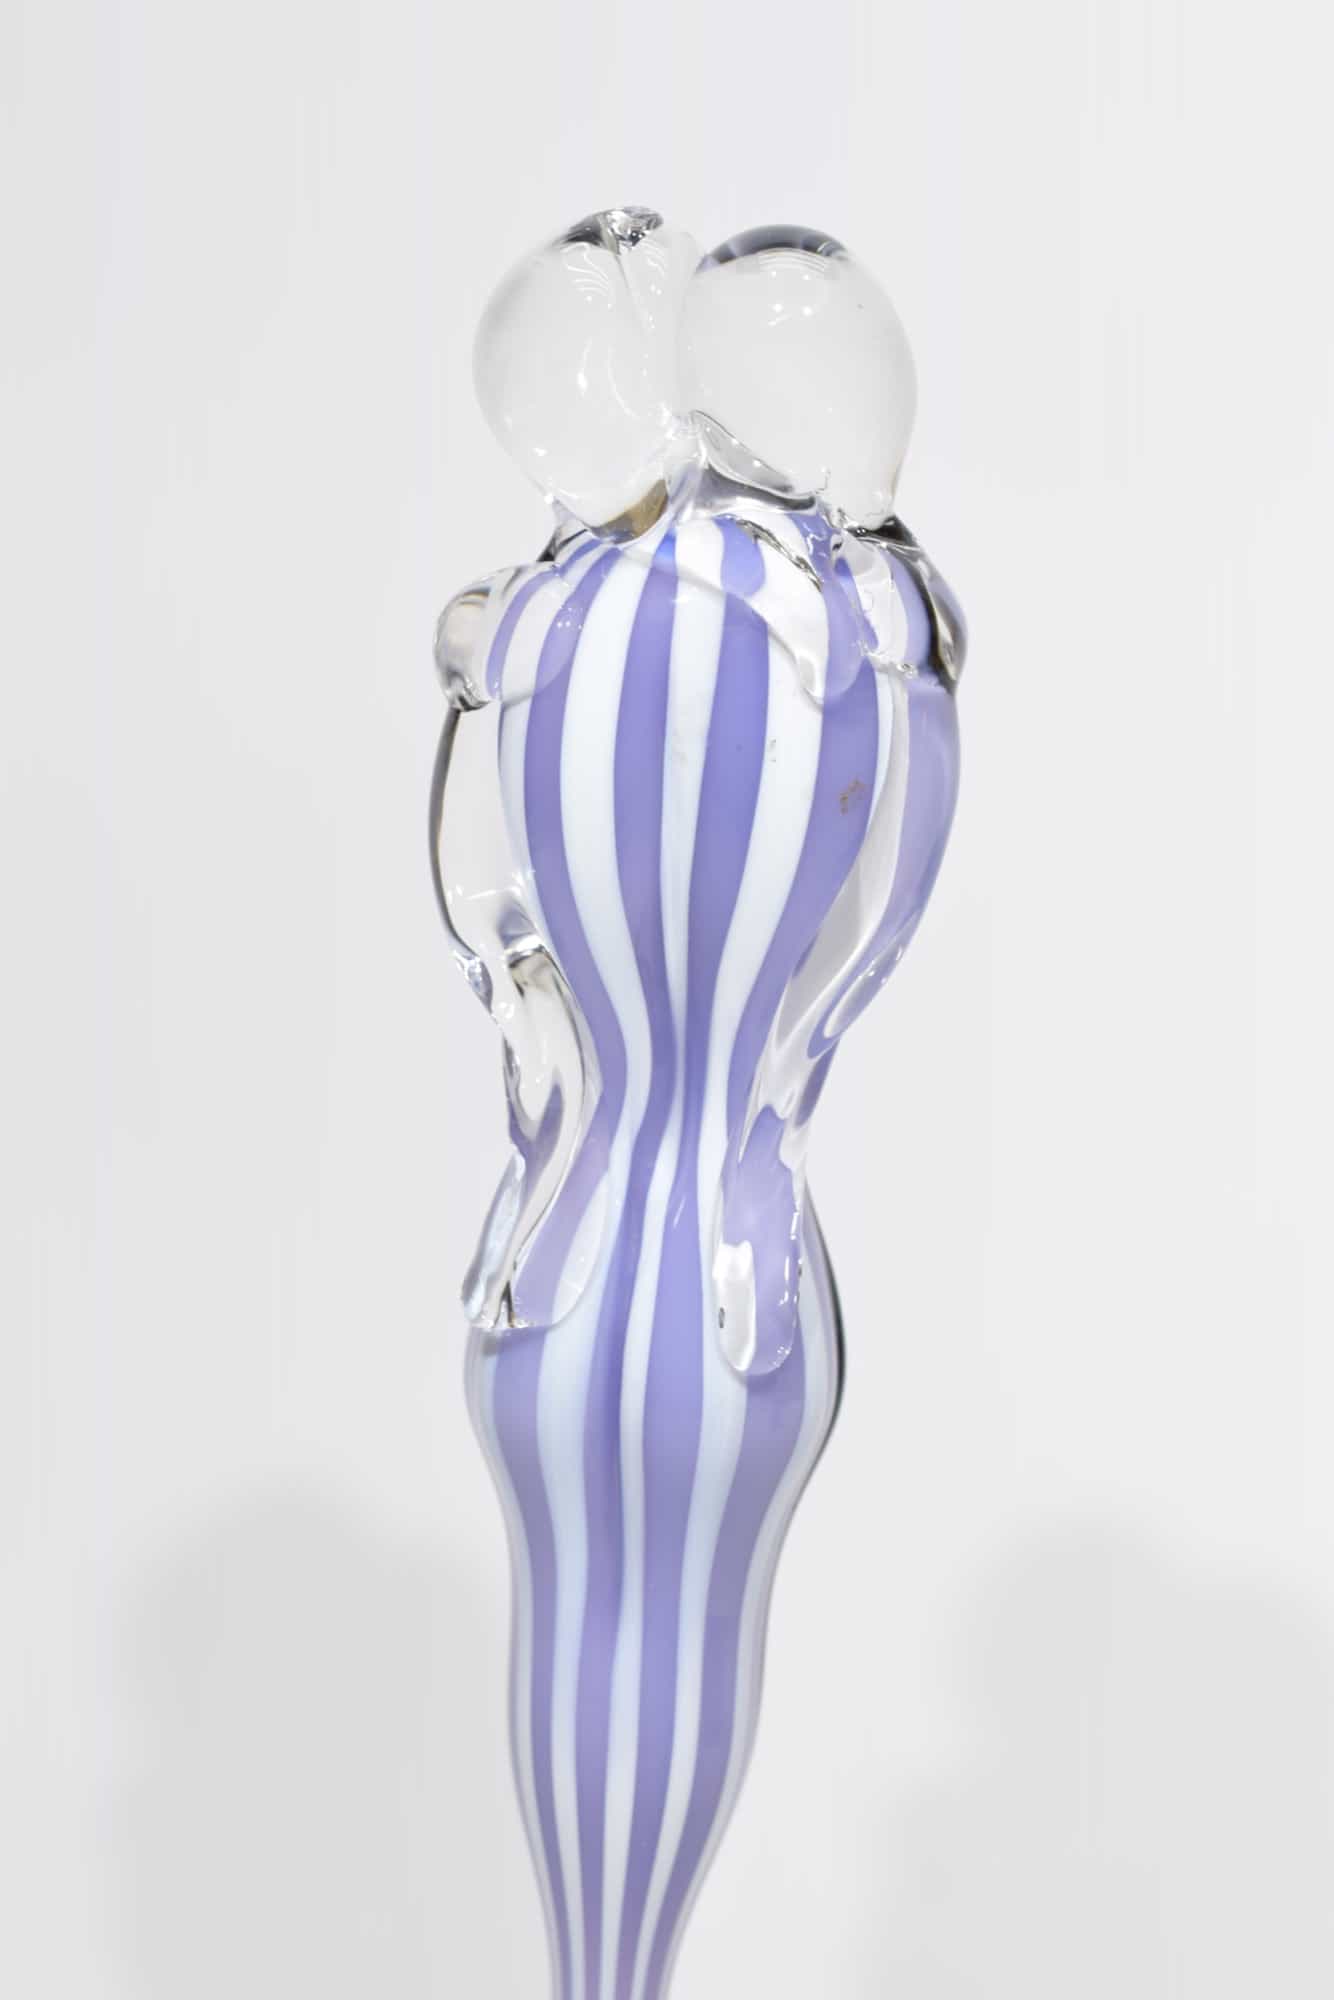 lovers-sculpture-glass-Murano-glass-10010